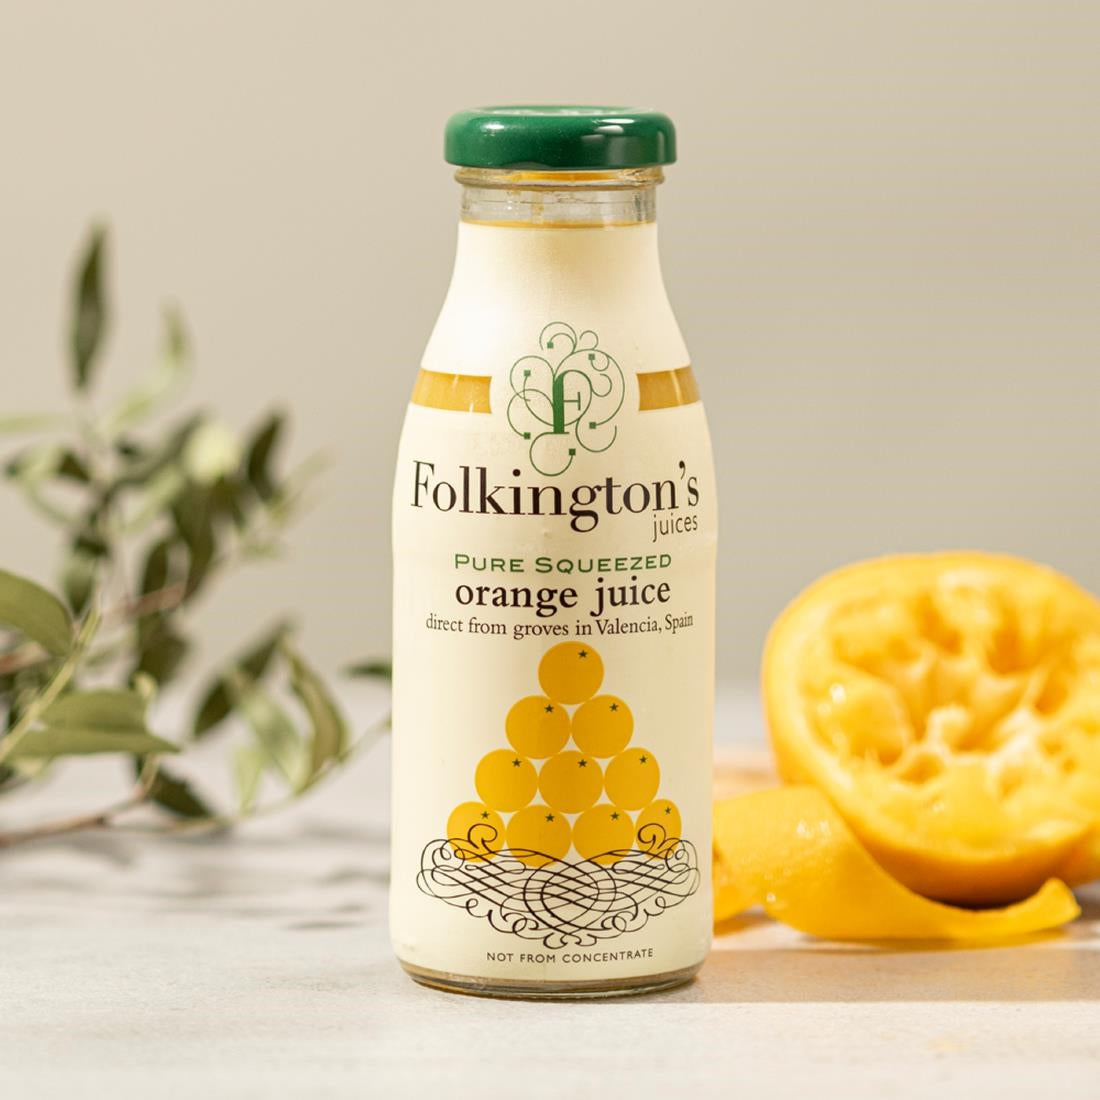 FU461 Folkington's Juices Orange Glass Bottle 250ml (Pack of 12)